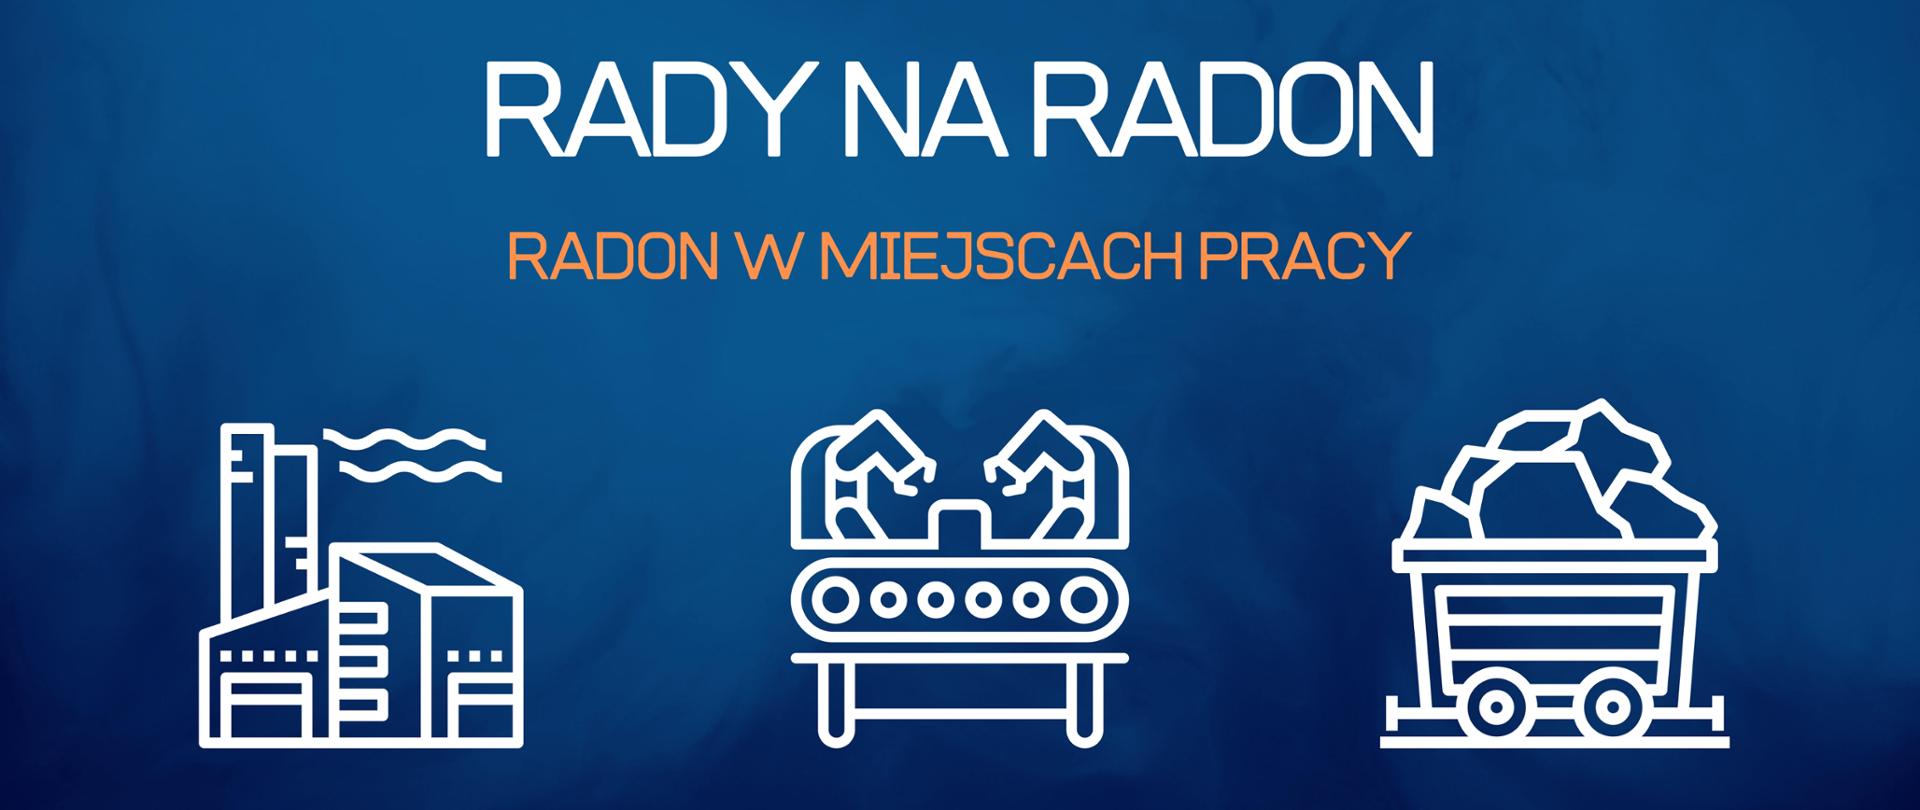 Rady na radon